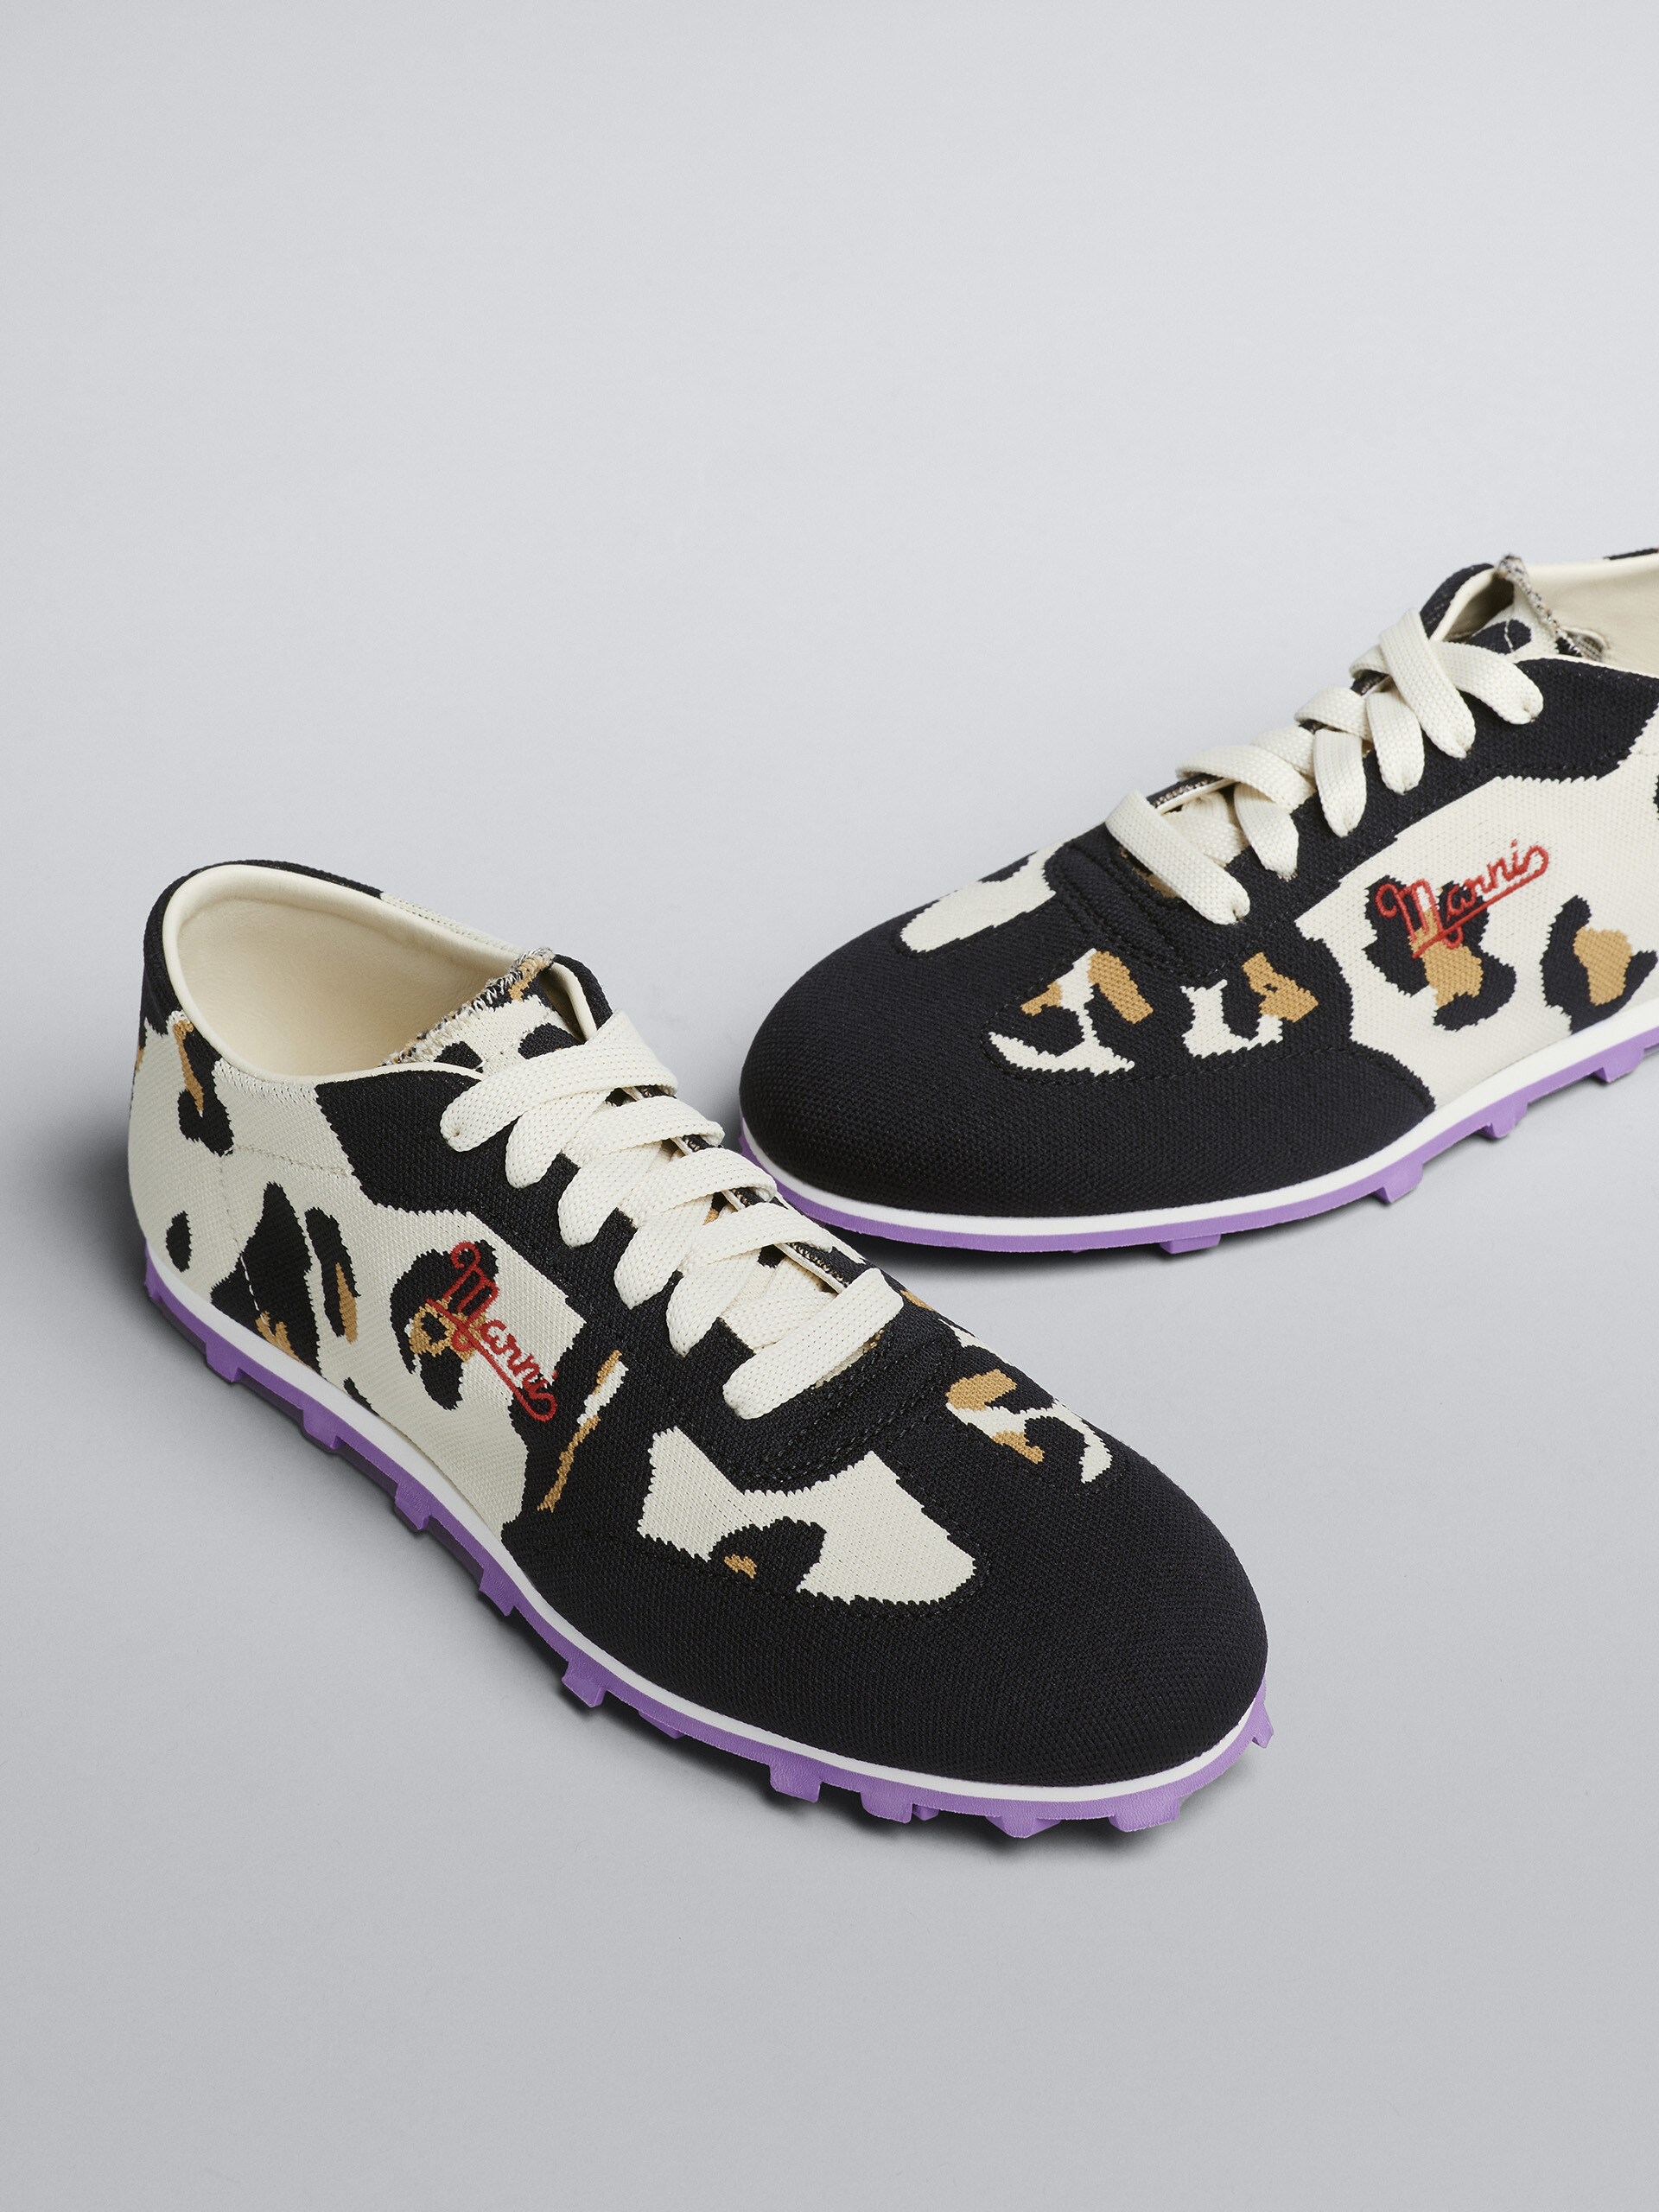 Sneaker PEBBLE in jacquard elastico stampa leopardo - Sneakers - Image 5